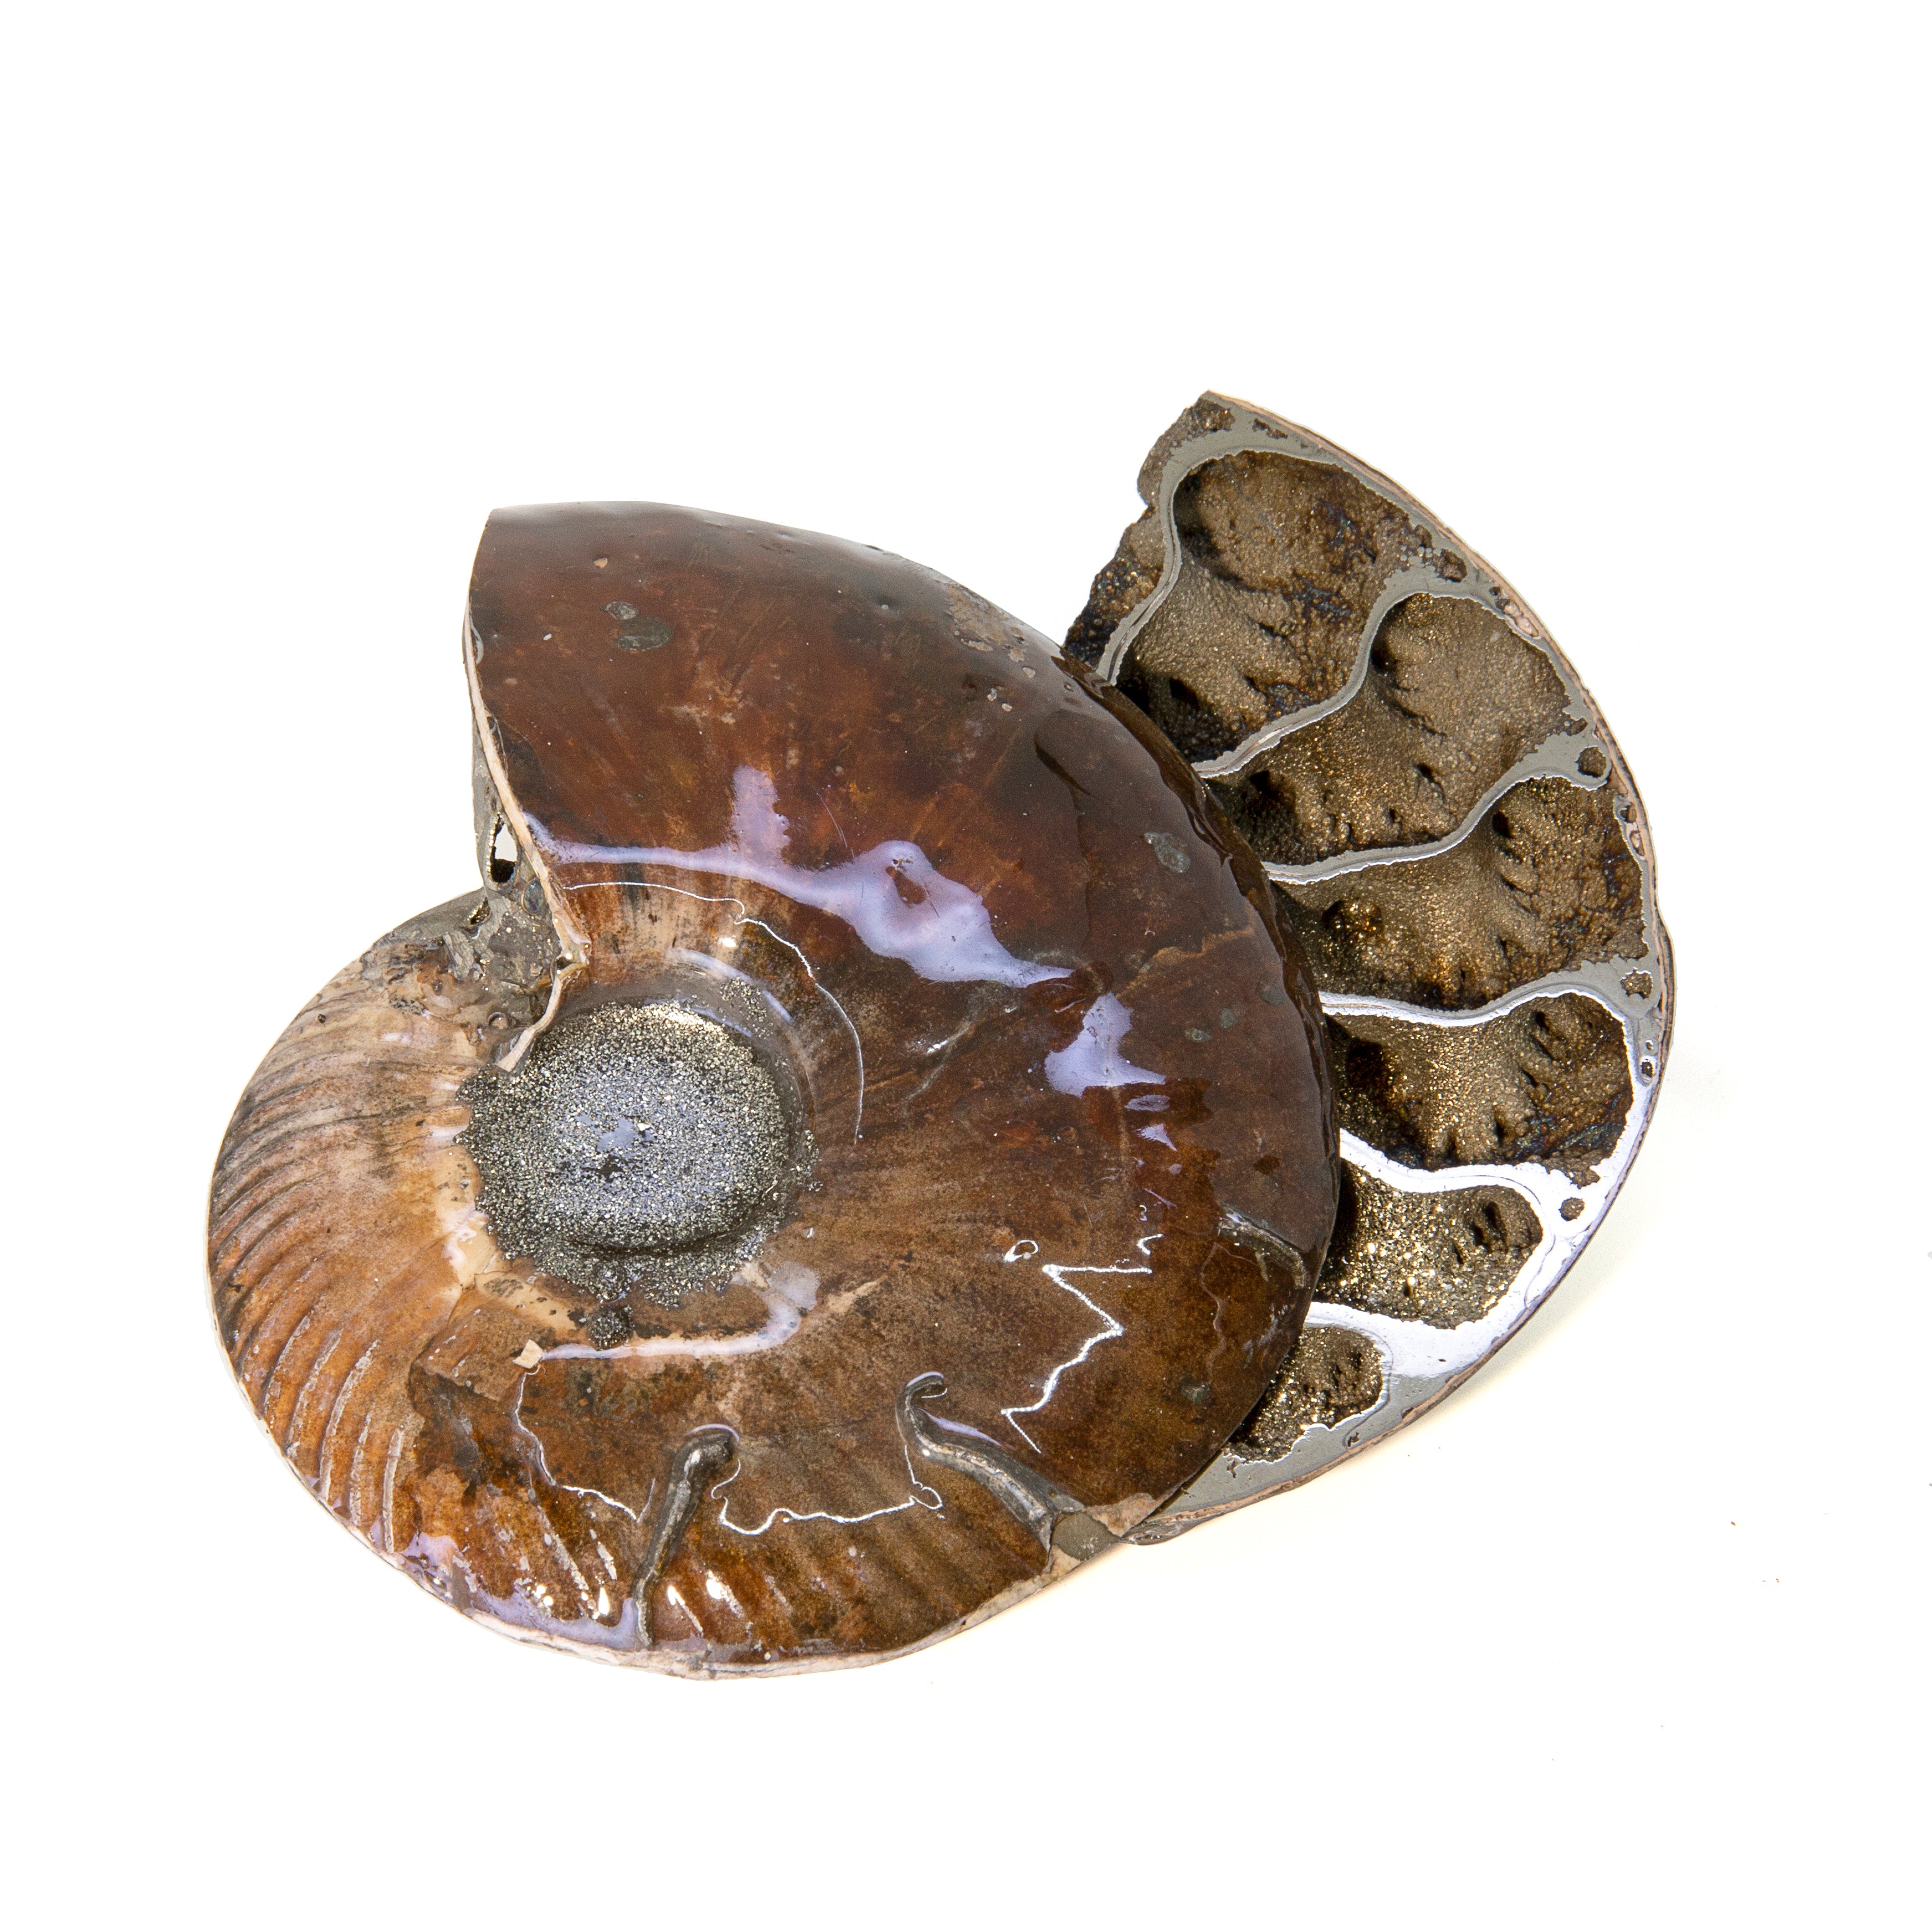 Pyritized Ammonite 3.6 inch Partially Polished Fossil Specimen Pair - Russia - JJX-202 - Crystalarium